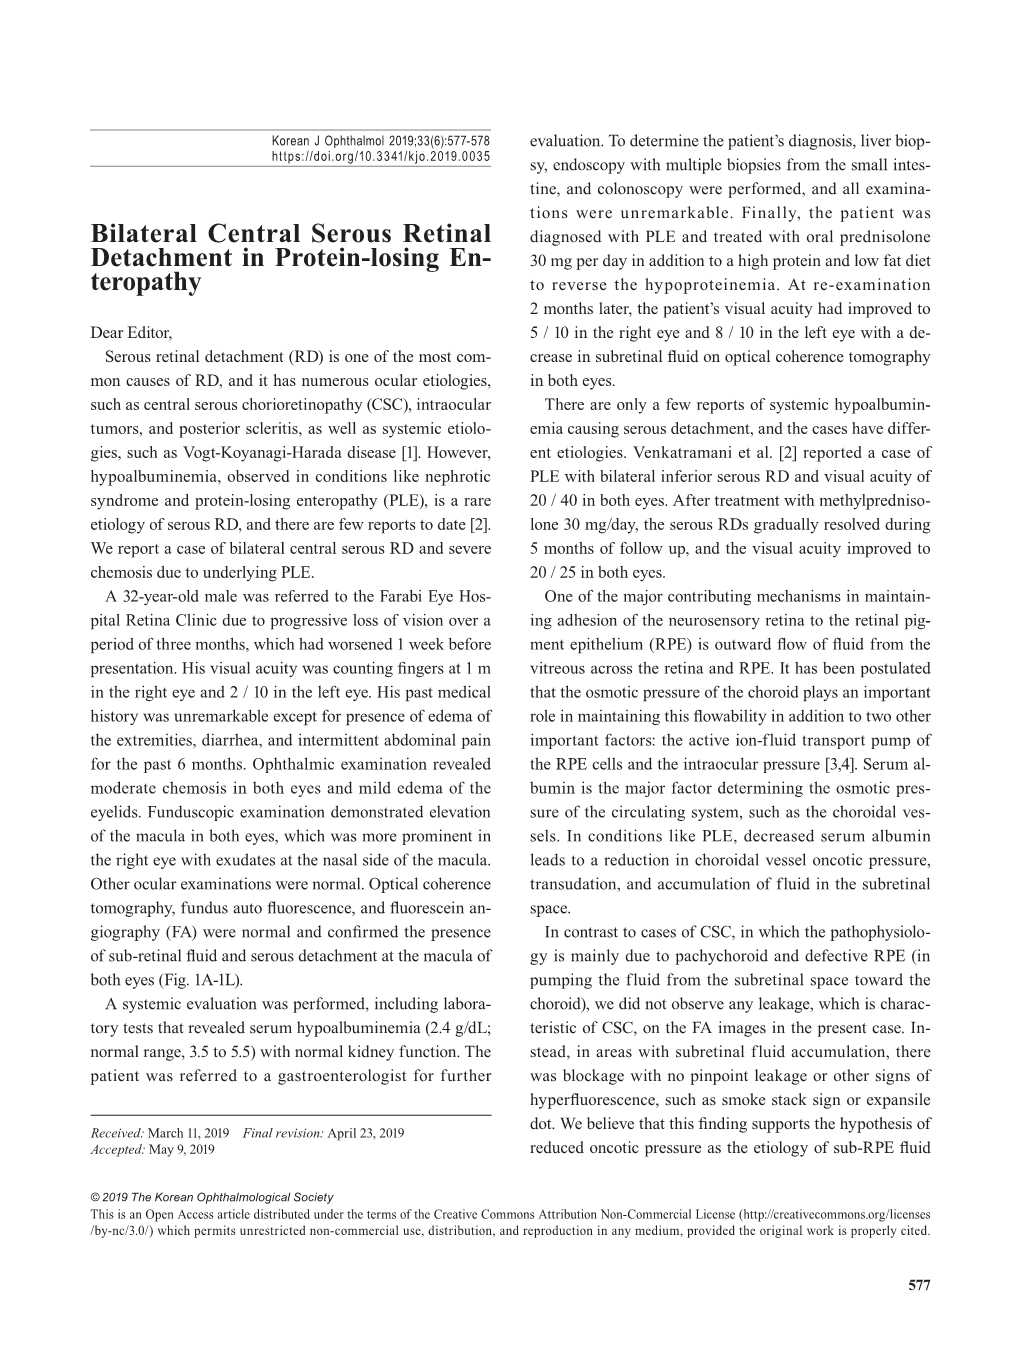 Bilateral Central Serous Retinal Detachment in Protein-Losing En